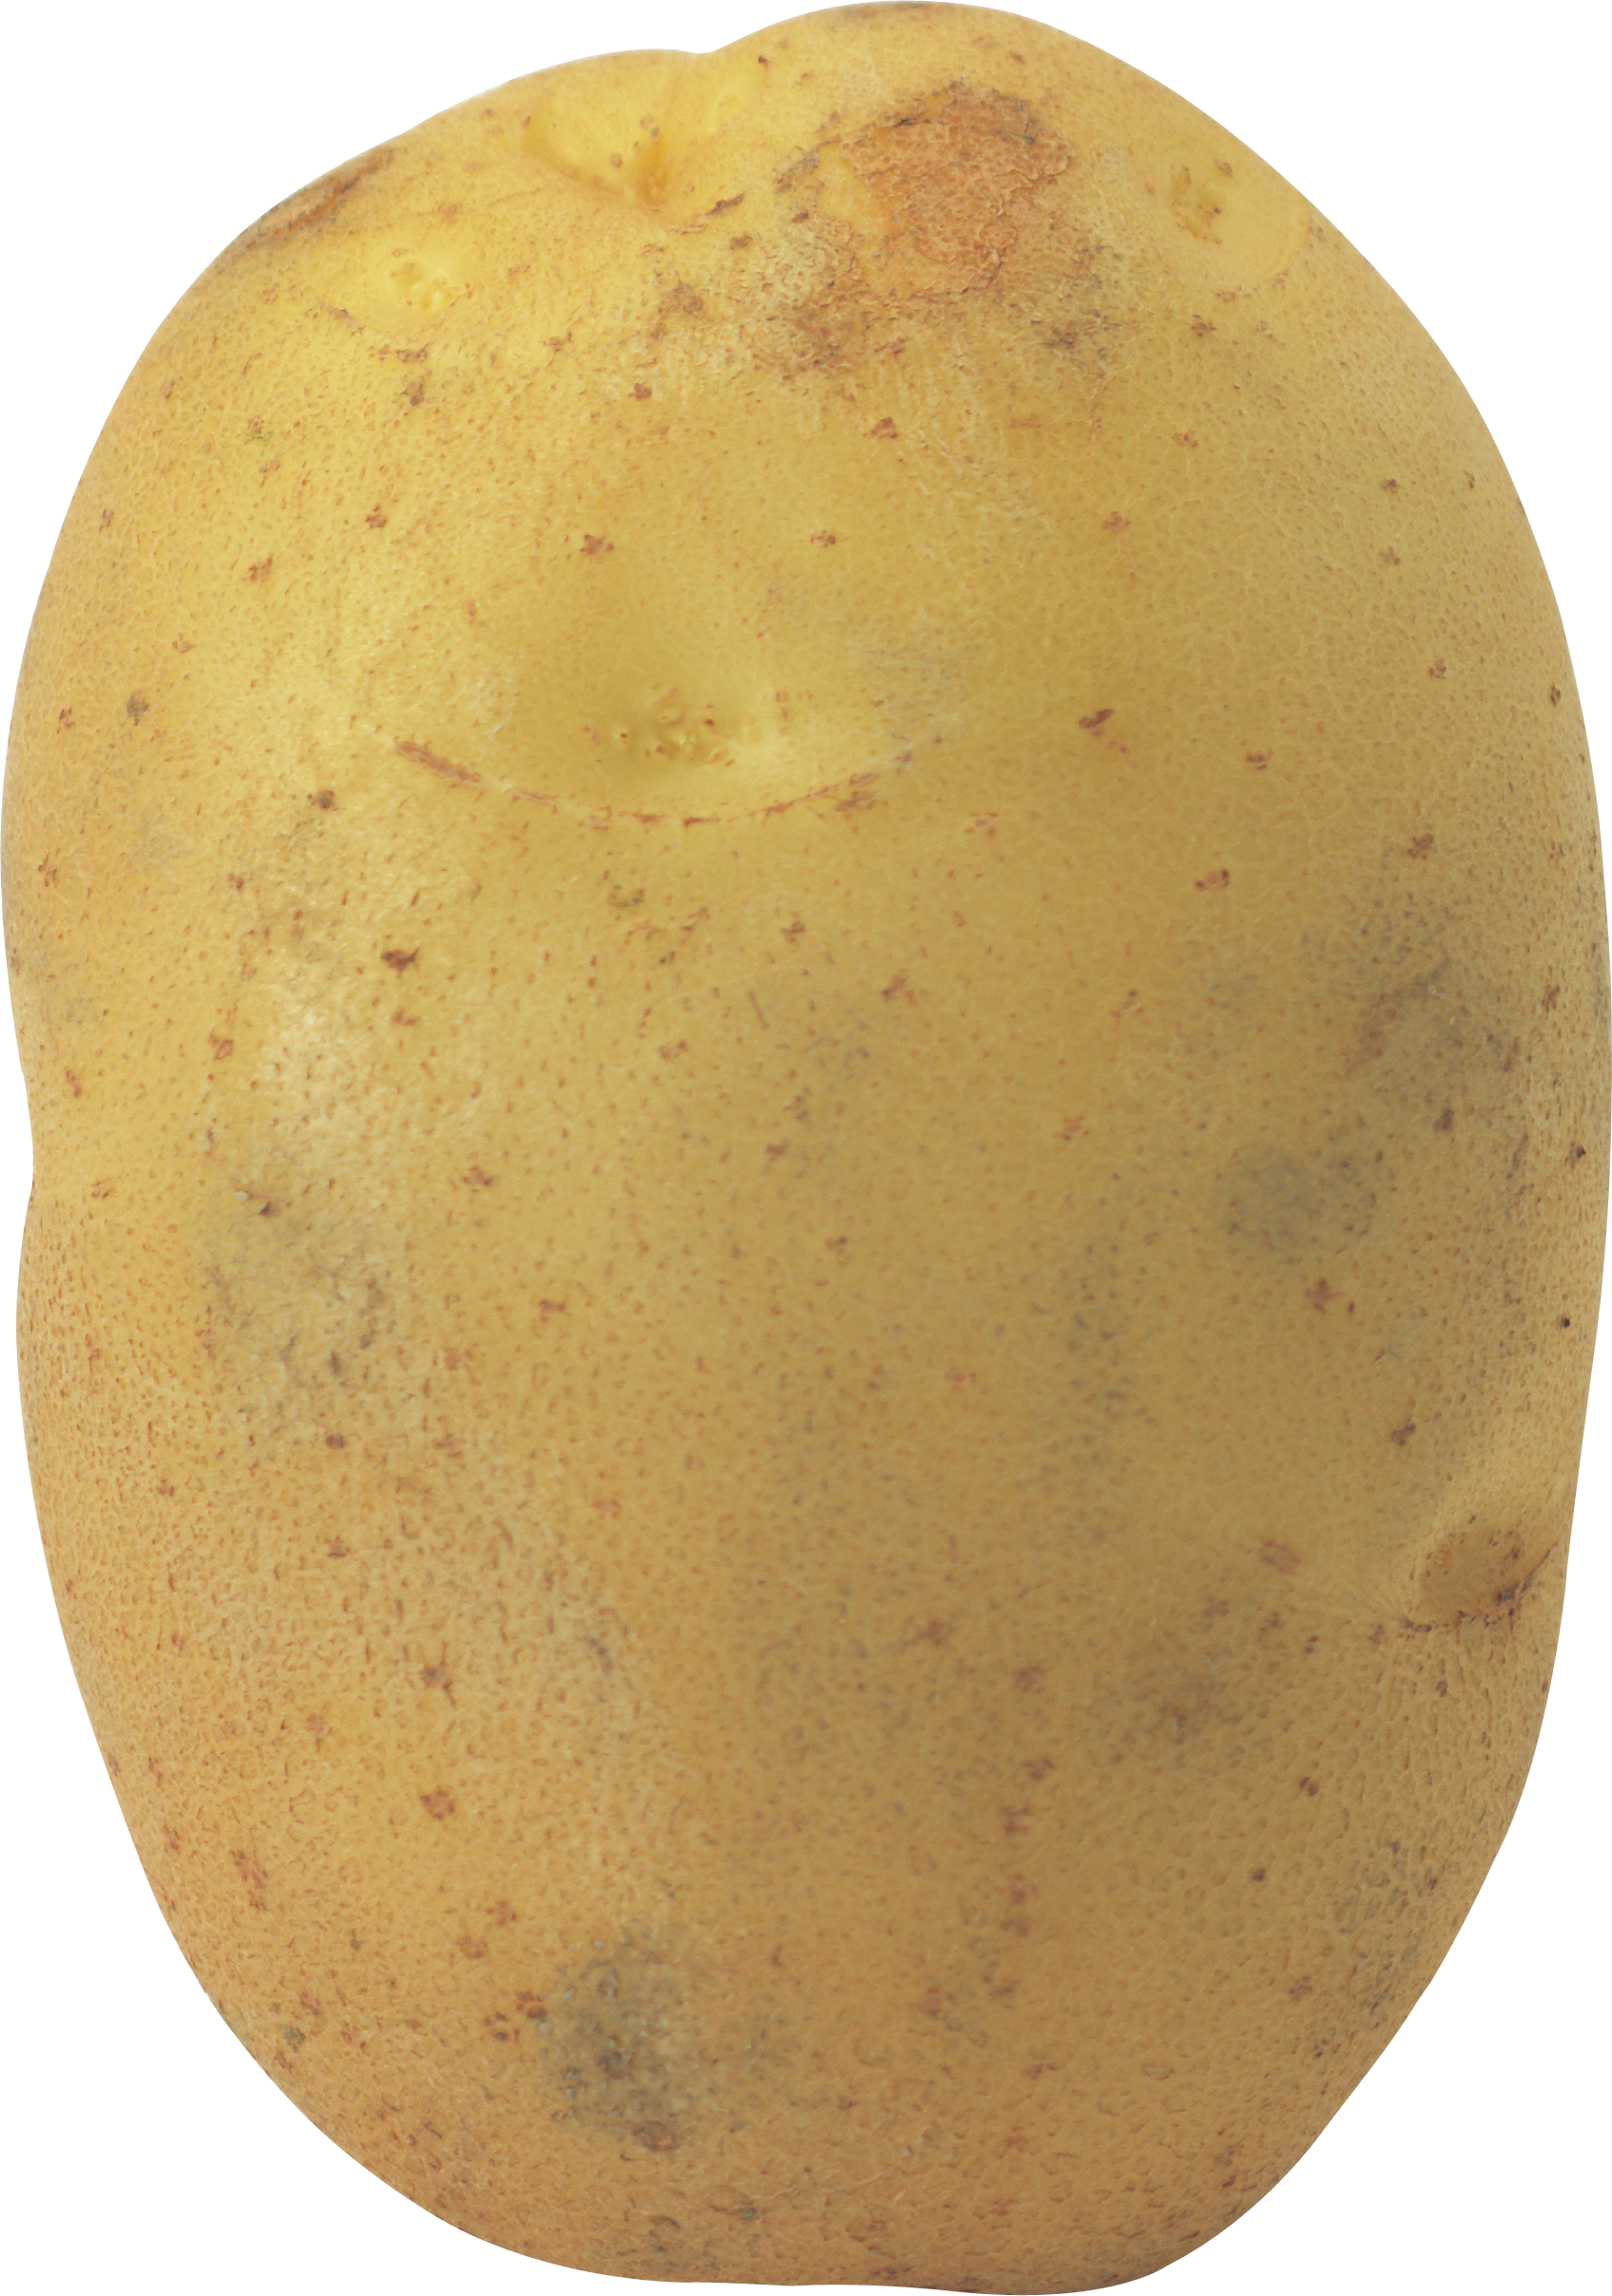 Large potato PNG image